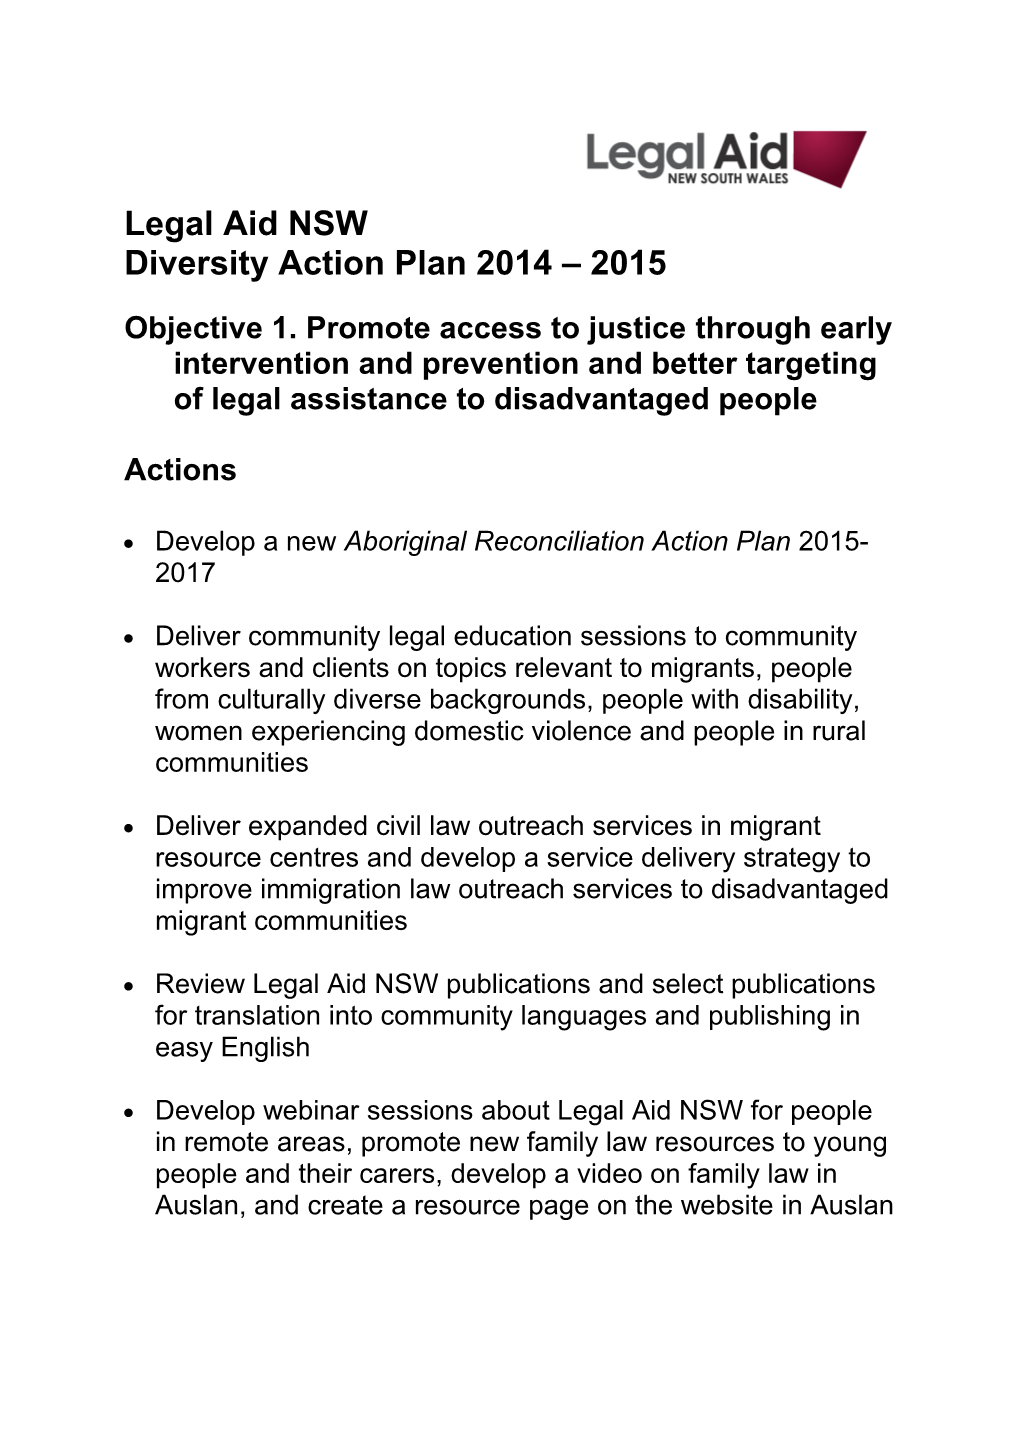 Diversity Action Plan 2014 2015